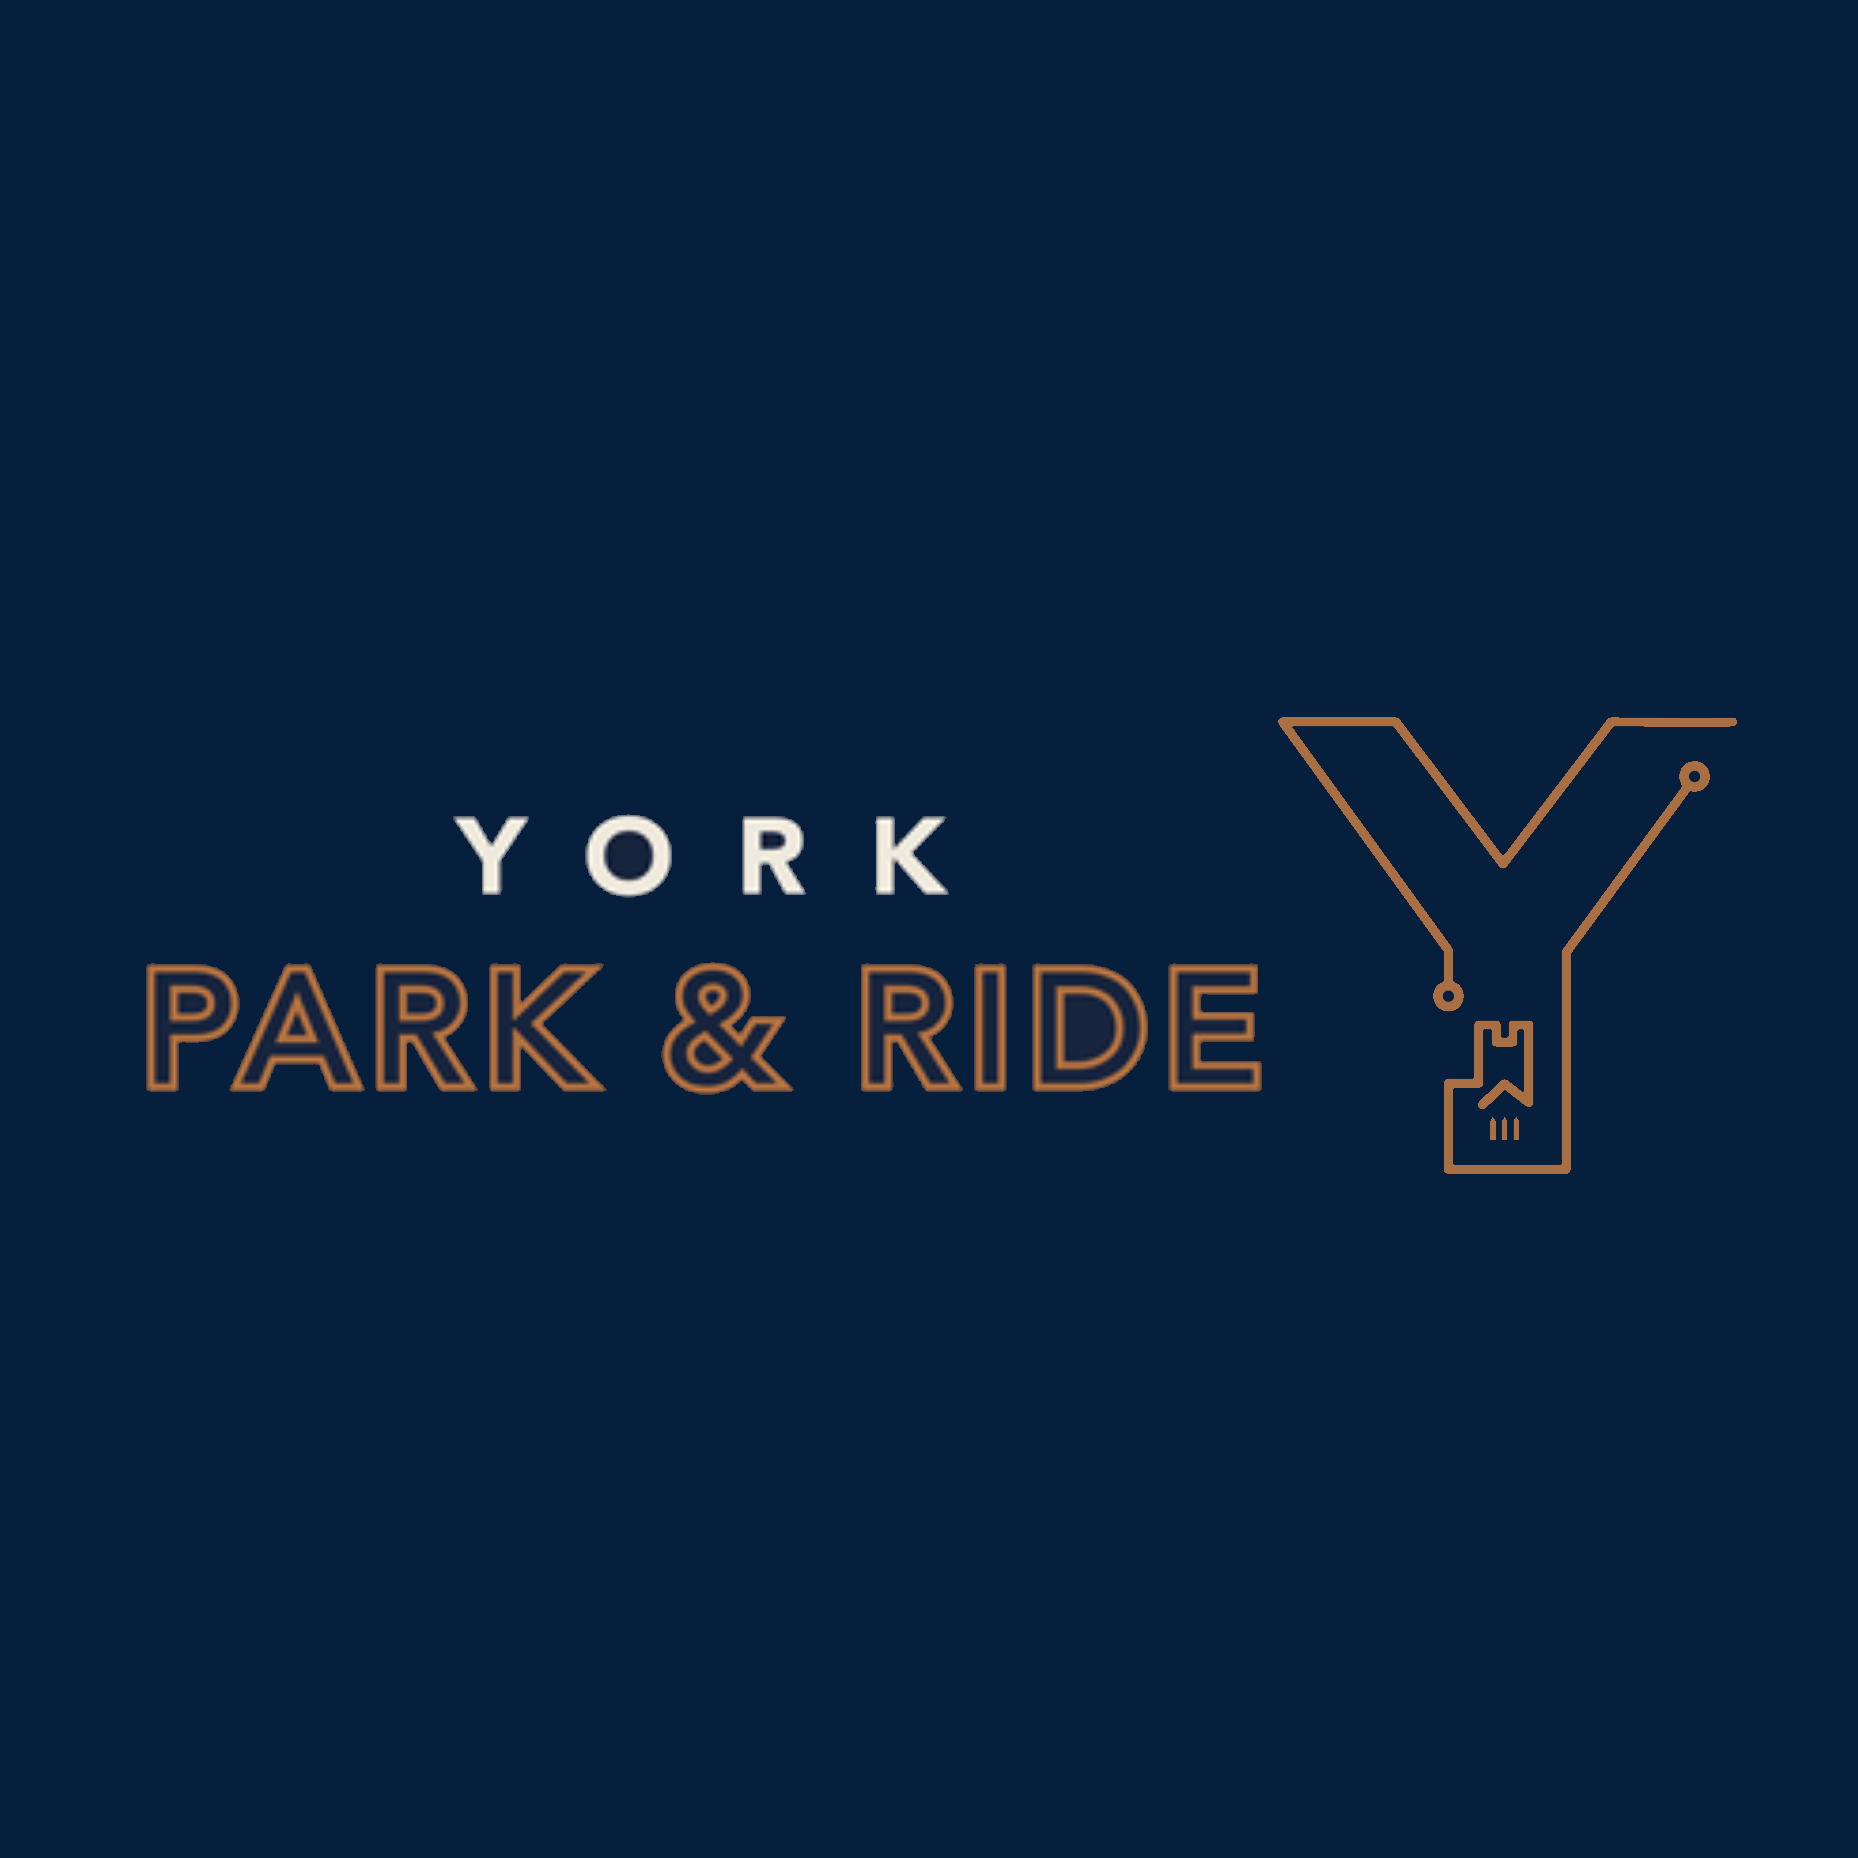 York Park & Ride square